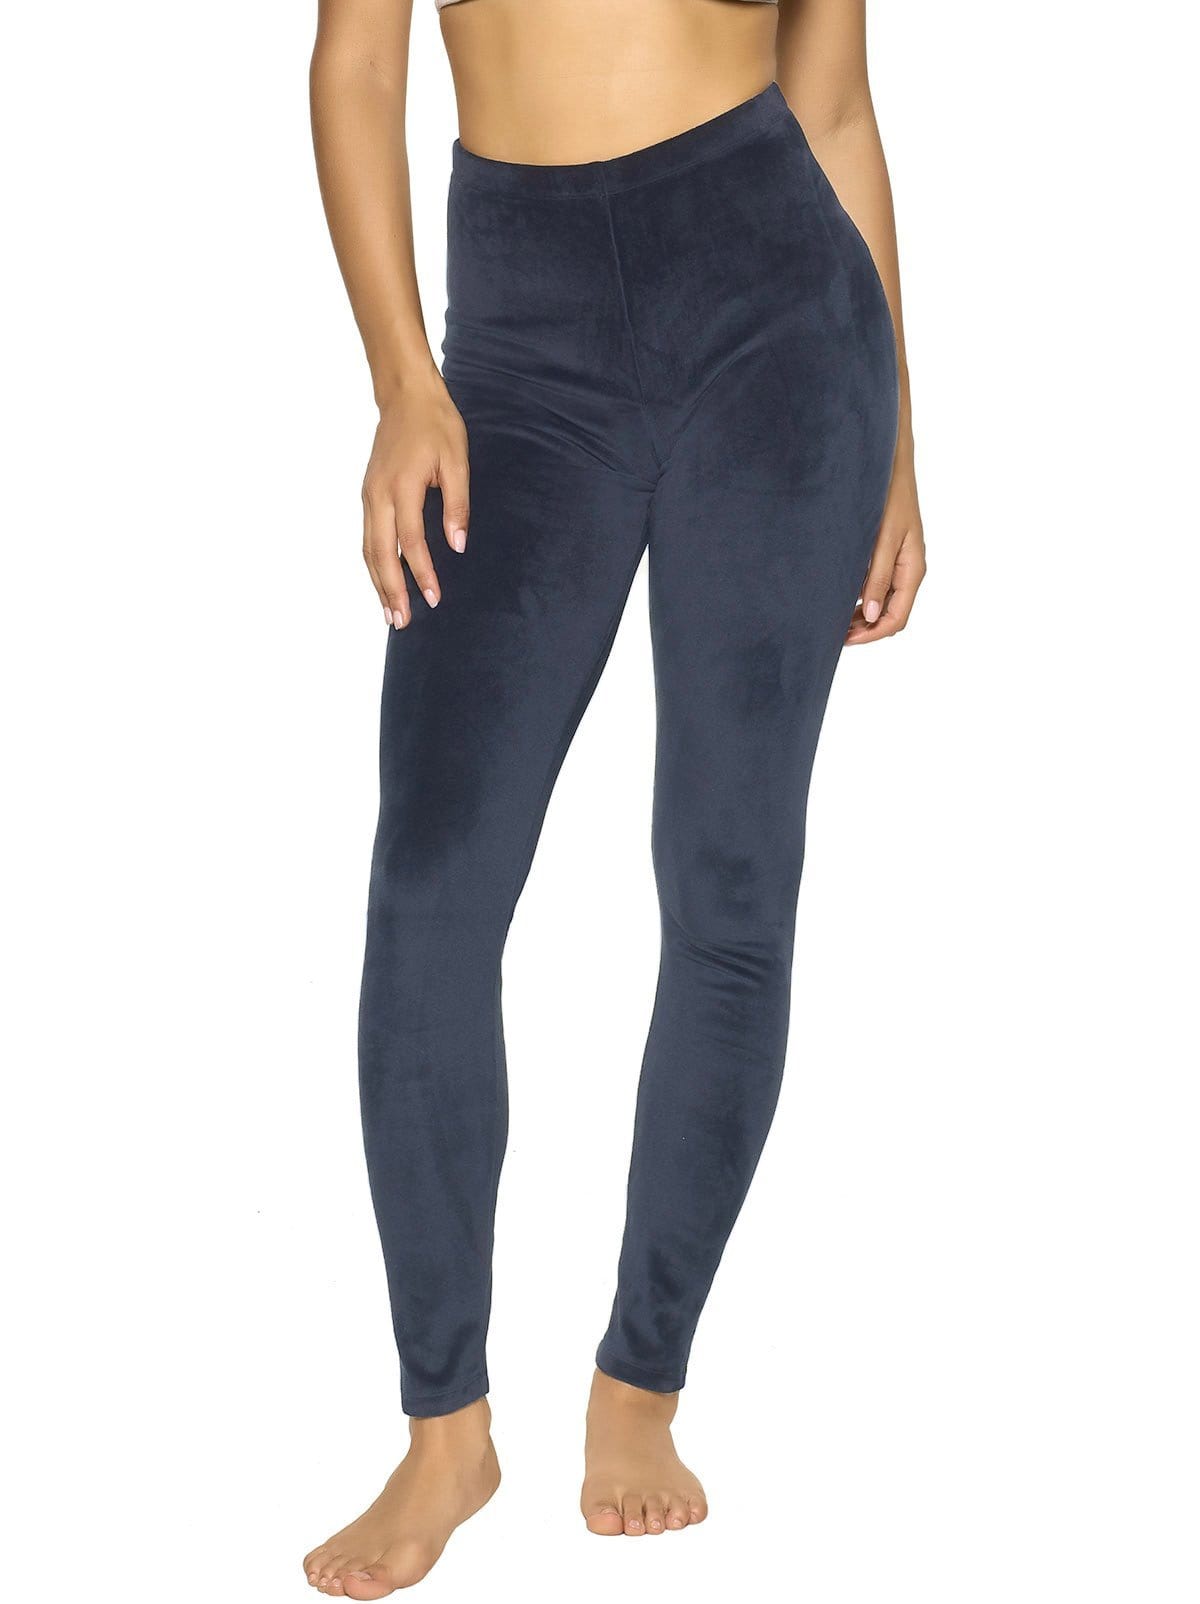  Felina Velvety Super Soft Lightweight Style 2801 Leggings  2-Pack - For Women - Yoga Pants, Workout Clothes